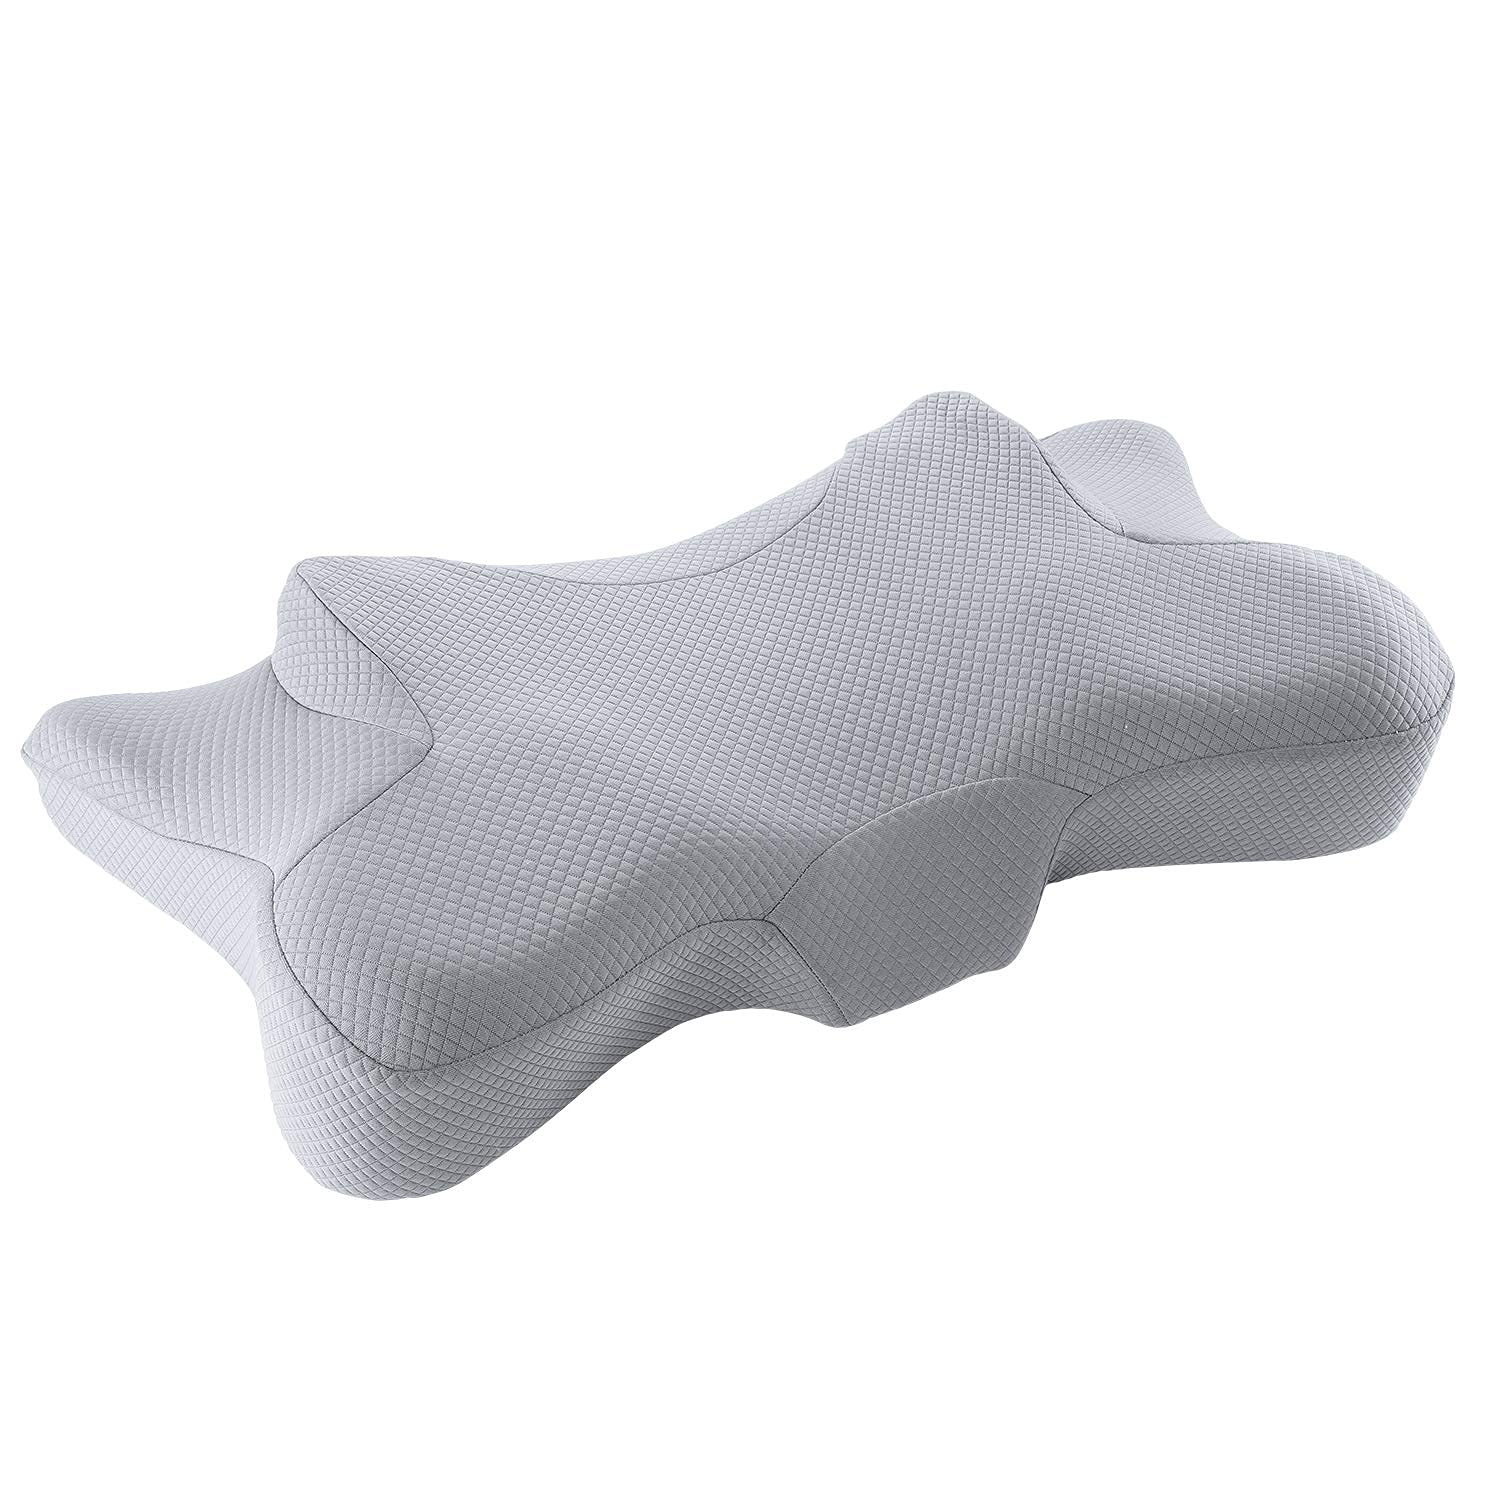 MARNUR Cervical Pillow Memory Foam Pillow Orthopedic Sleeping Neck